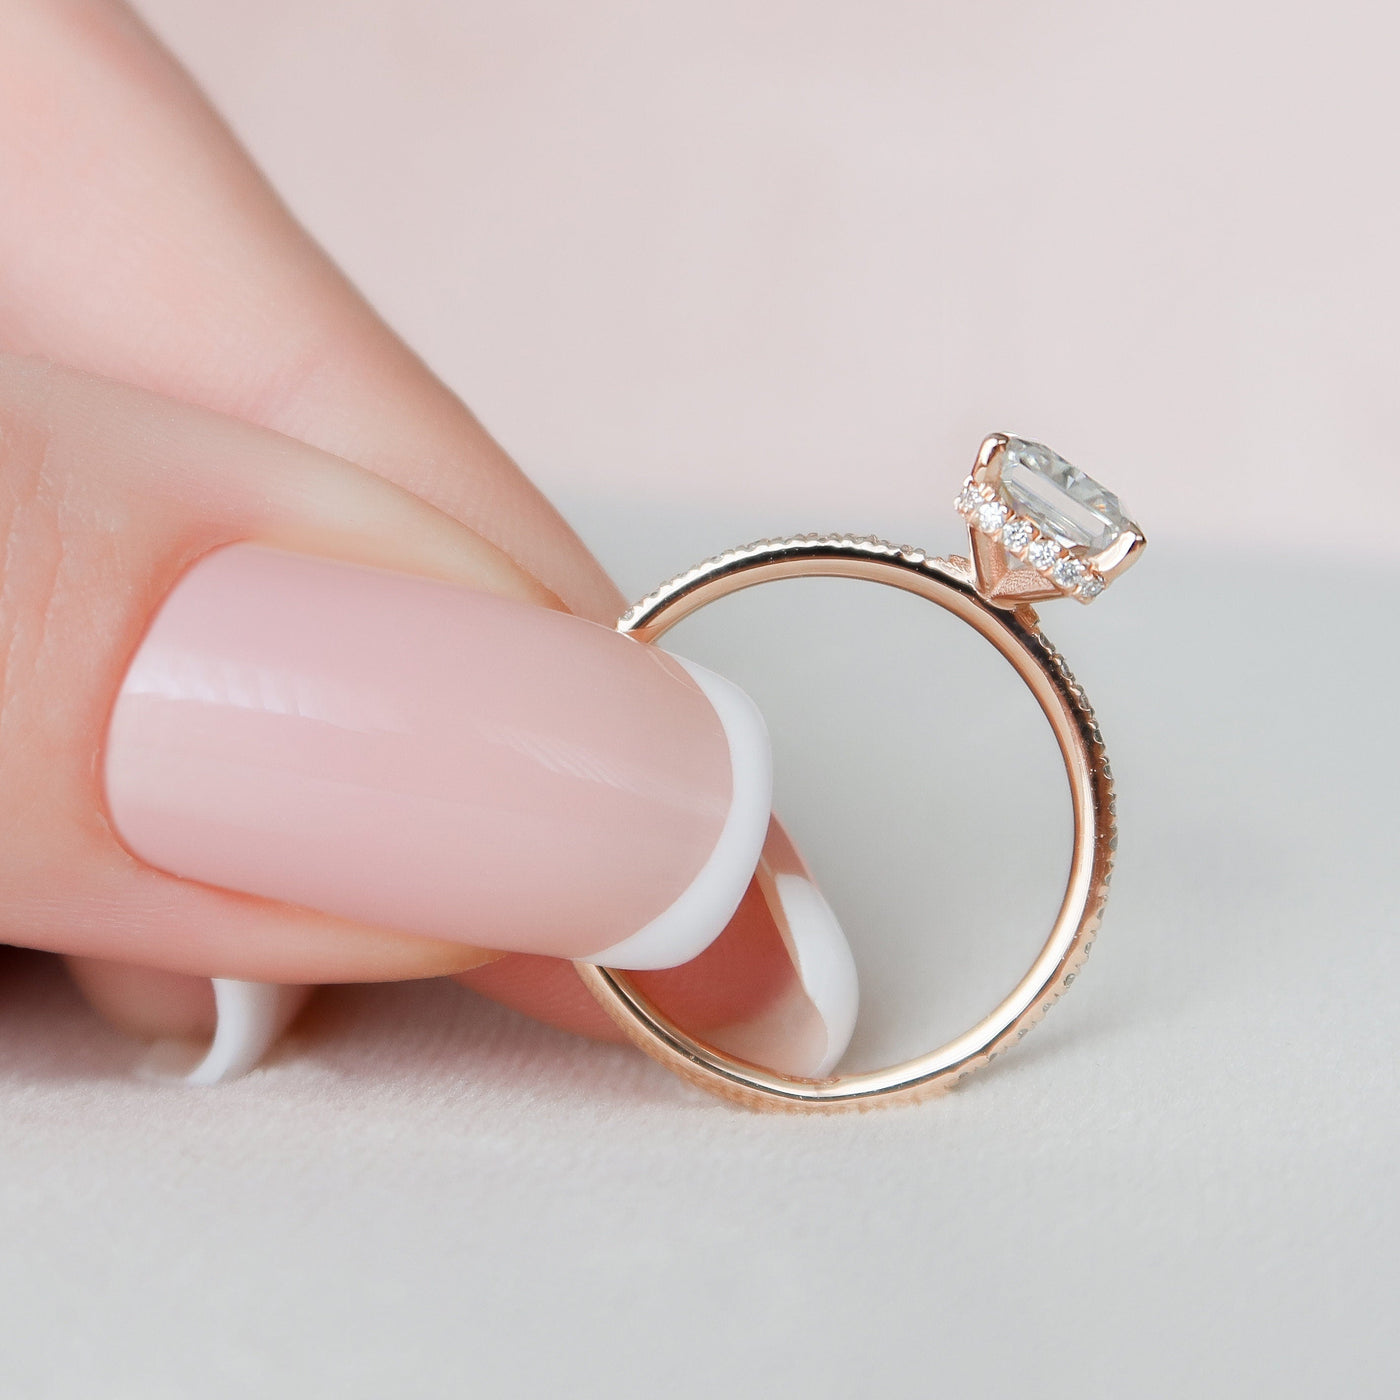 2.0CT Radiant Cut Hidden Halo Moissanite Diamond Pave Engagement Ring